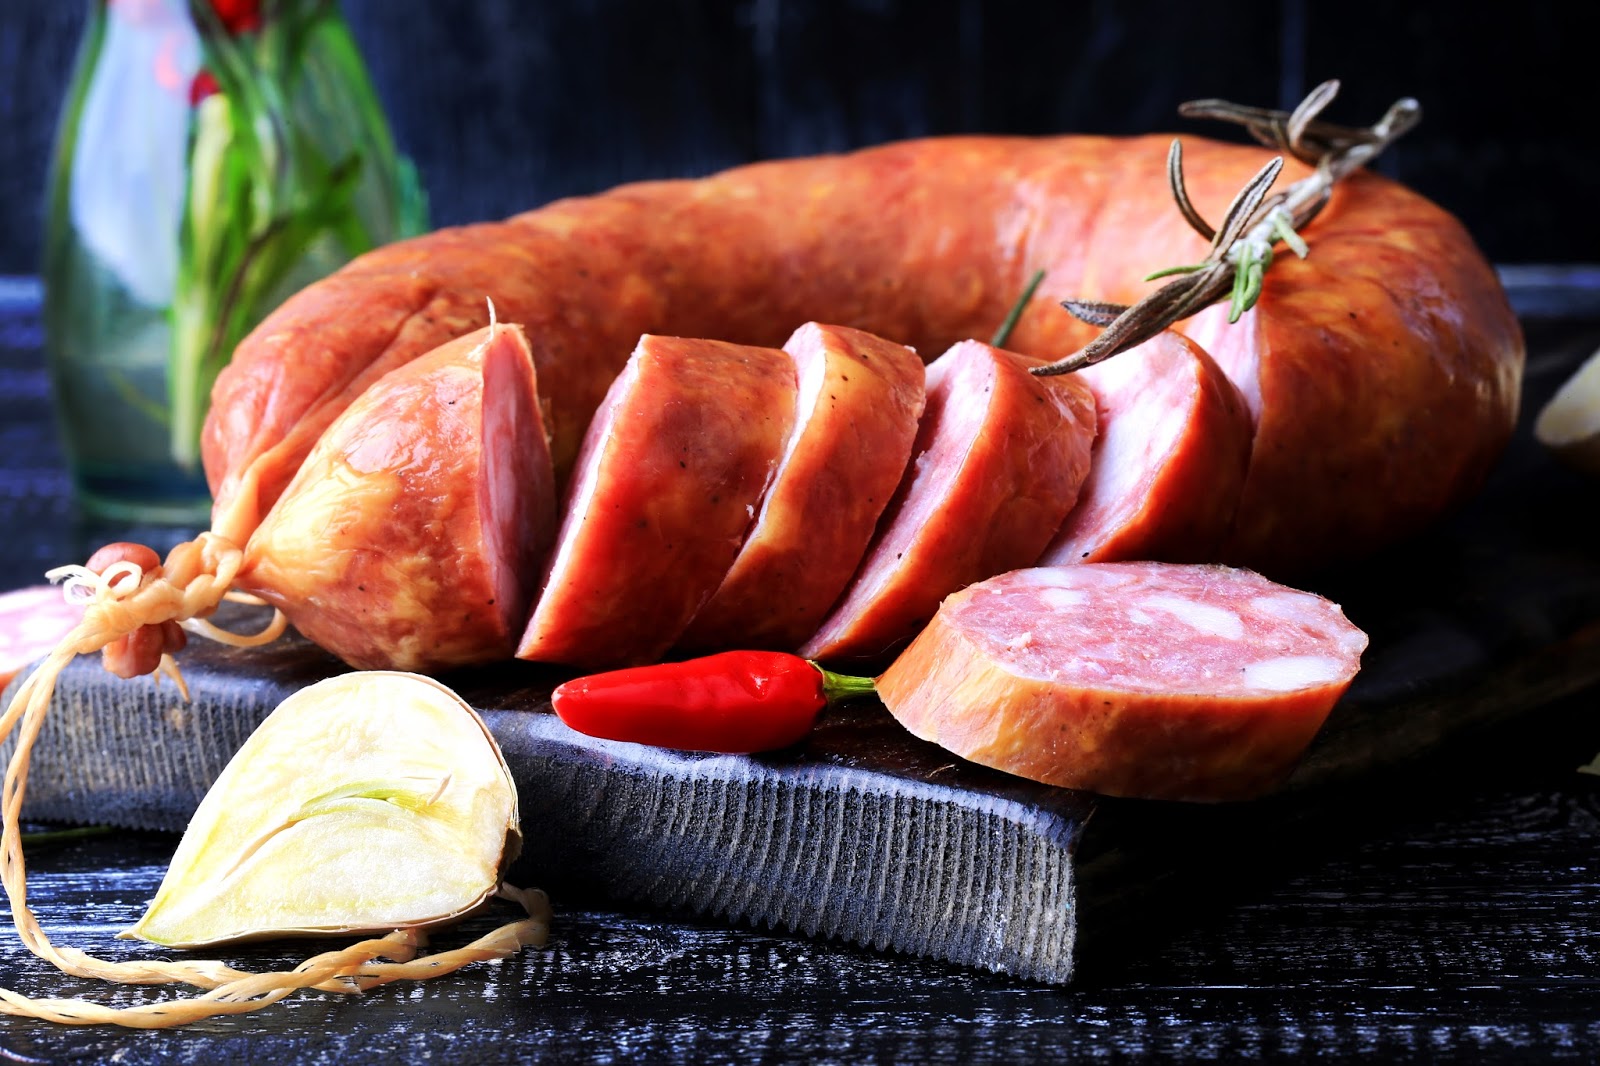 The Sausage Maker Blog: Making Polish Sausage at Home